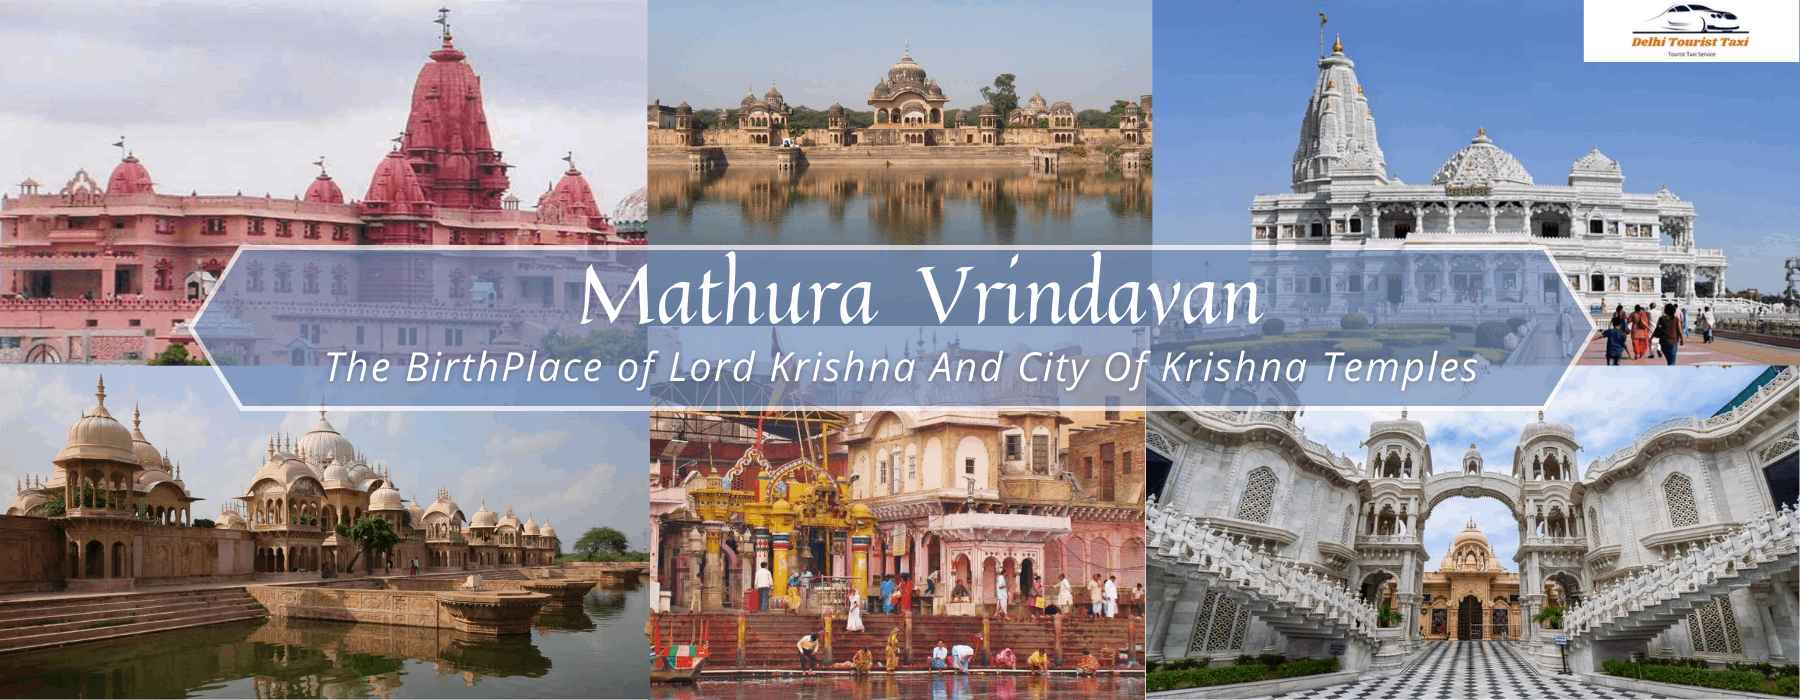 Mathura-Vrindavan_tourist_place